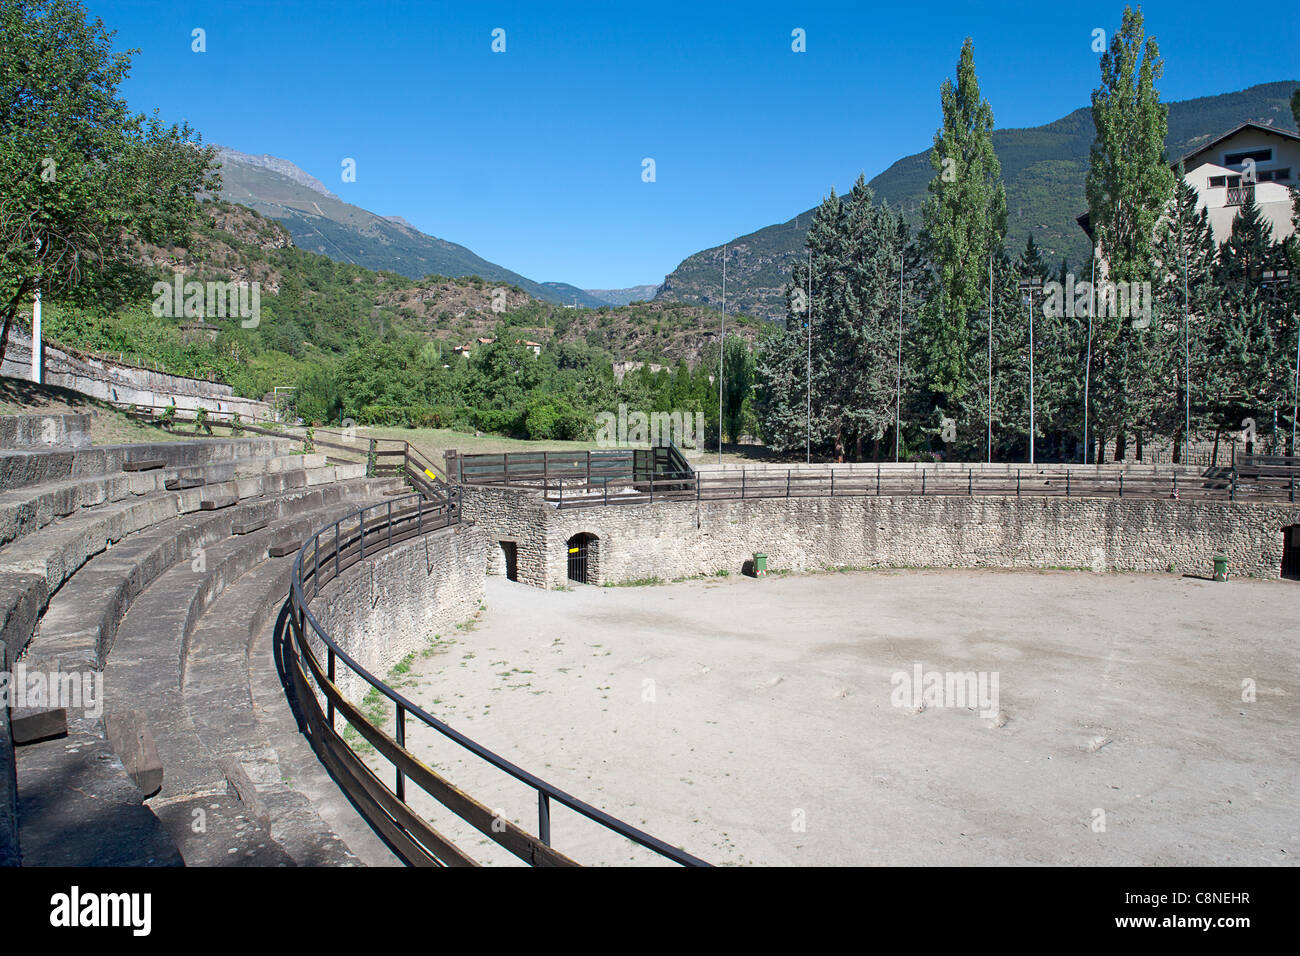 Italy, Piemonte, Susa, Roman Amphitheater remains Stock Photo